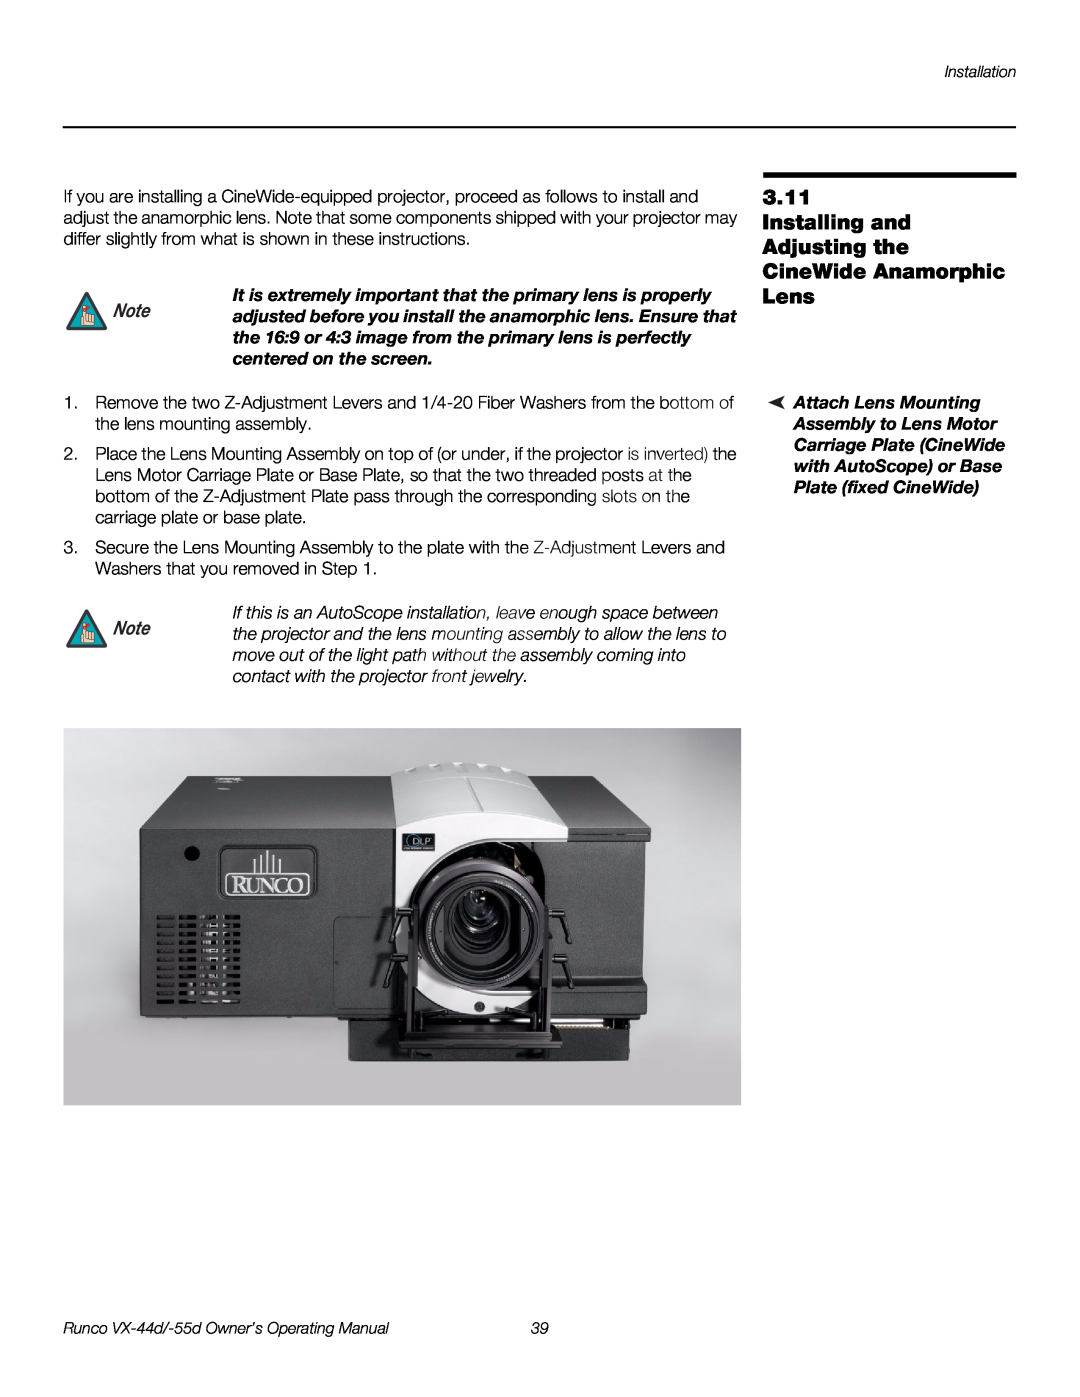 Runco VX-55D, VX-44D manual Installing and Adjusting the CineWide Anamorphic Lens 